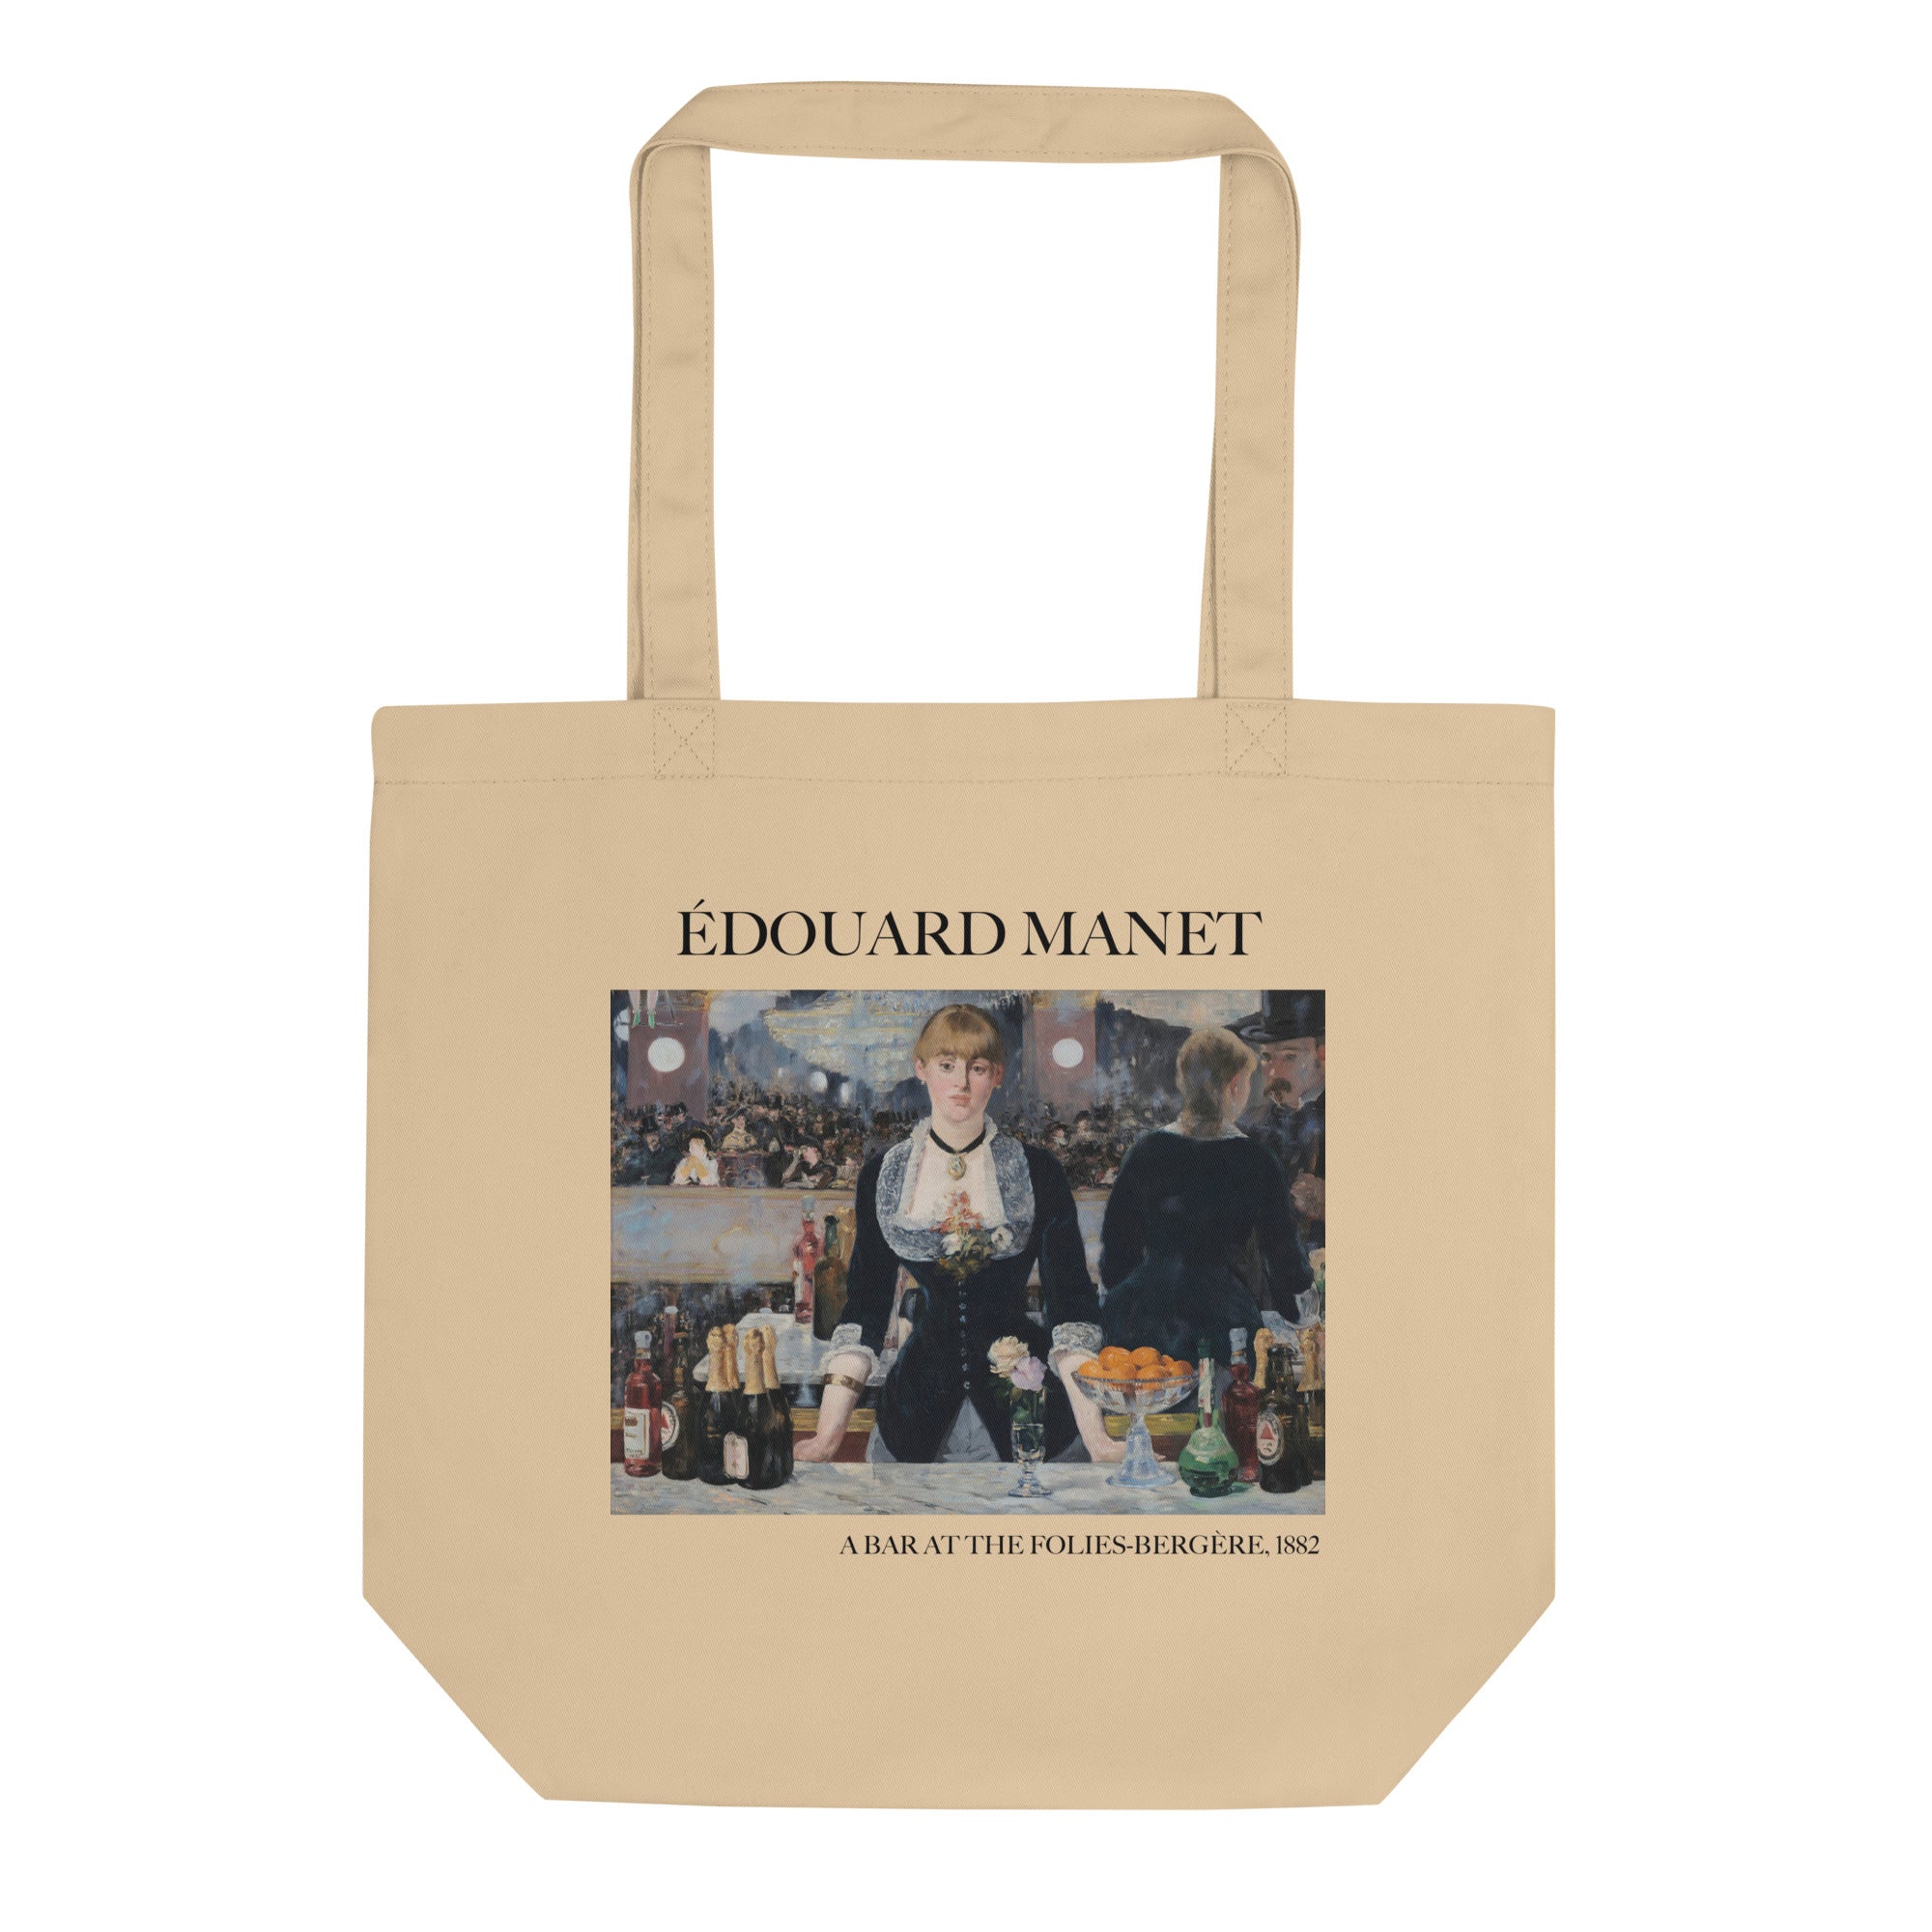 Édouard Manet 'A Bar at the Folies-Bergère' Famous Painting Totebag | Eco Friendly Art Tote Bag